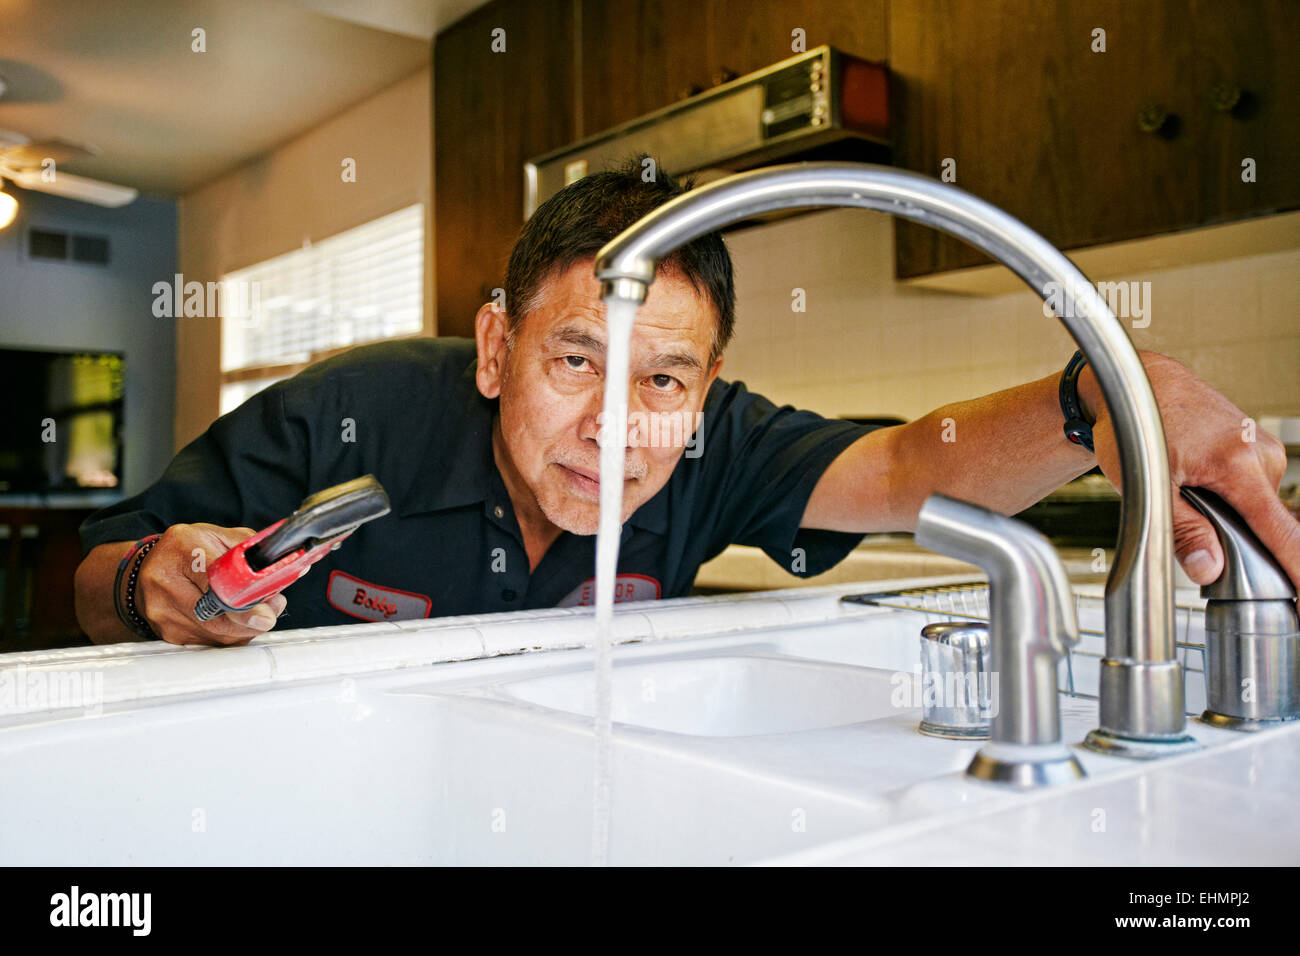 Pacific Islander plumber examining sink in kitchen Stock Photo